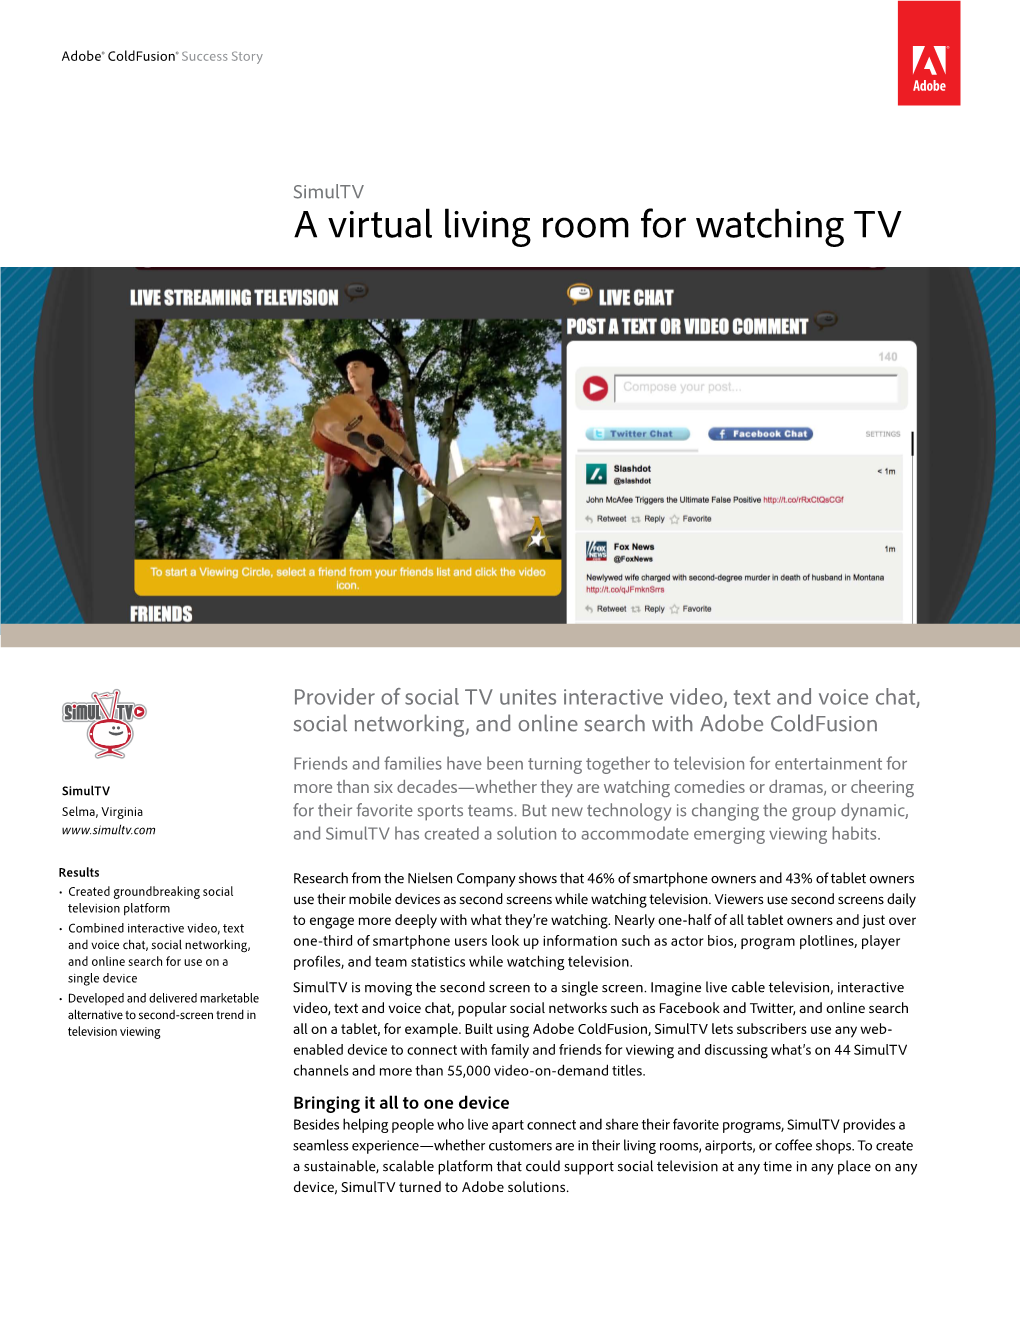 Simultv a Virtual Living Room for Watching TV